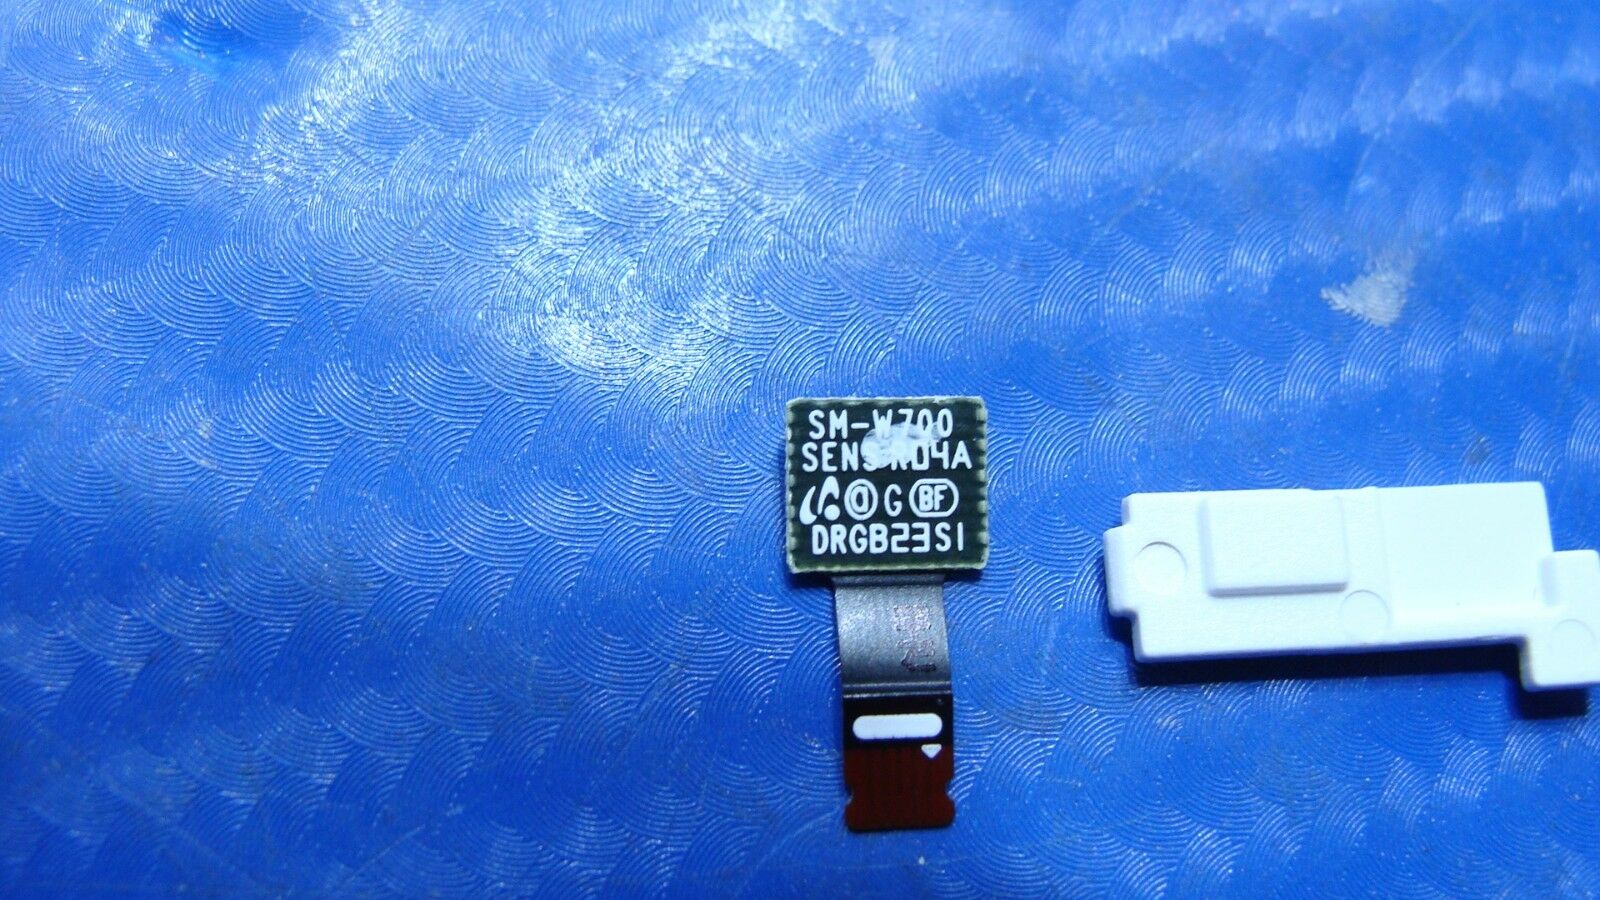 Samsung Galaxy TabPro S SM-W700 12